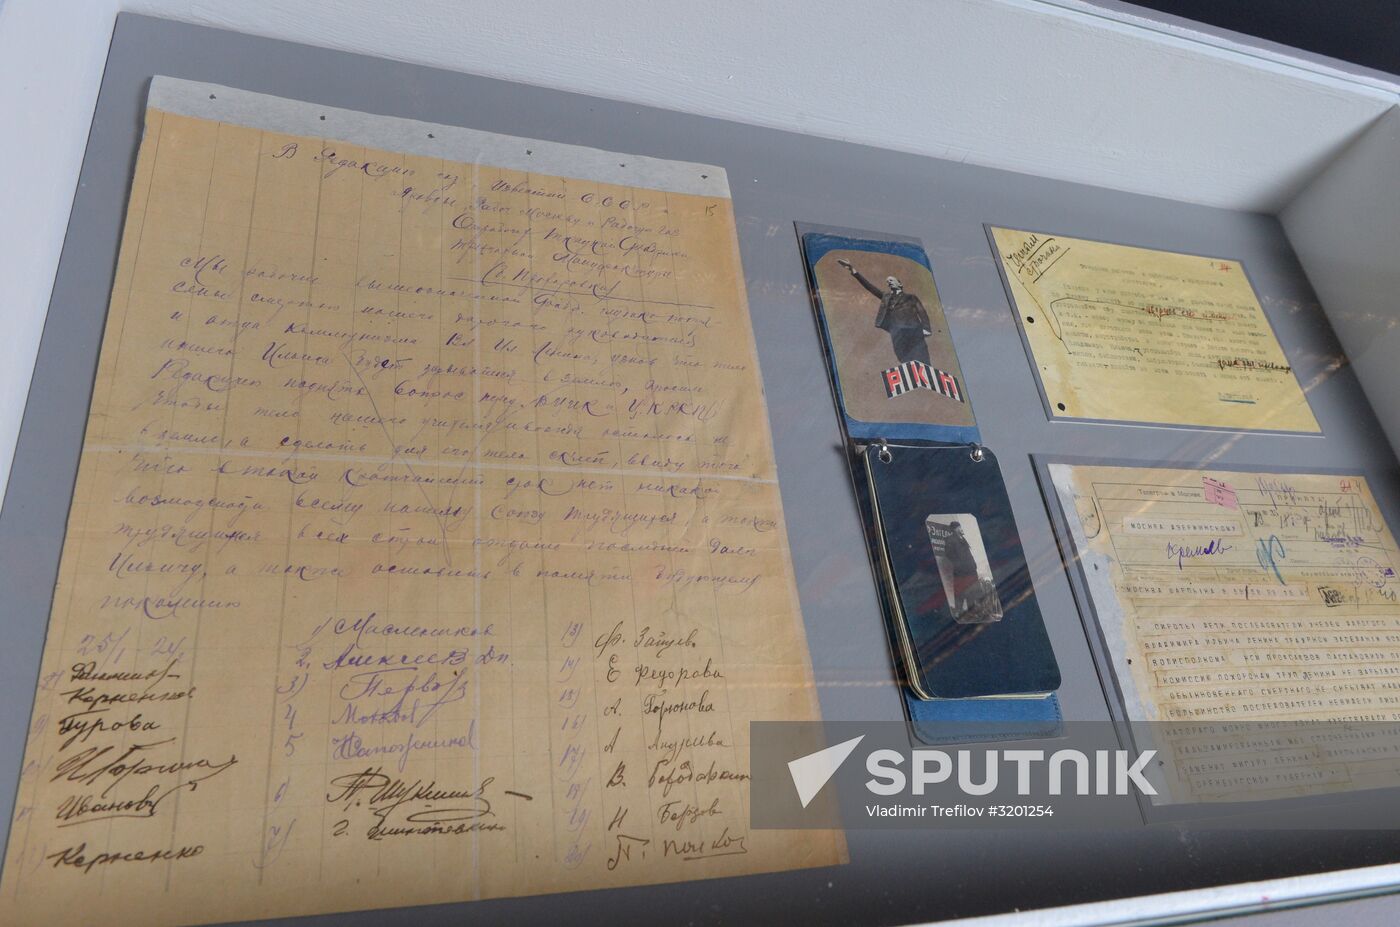 Lenin historical document exhibition items